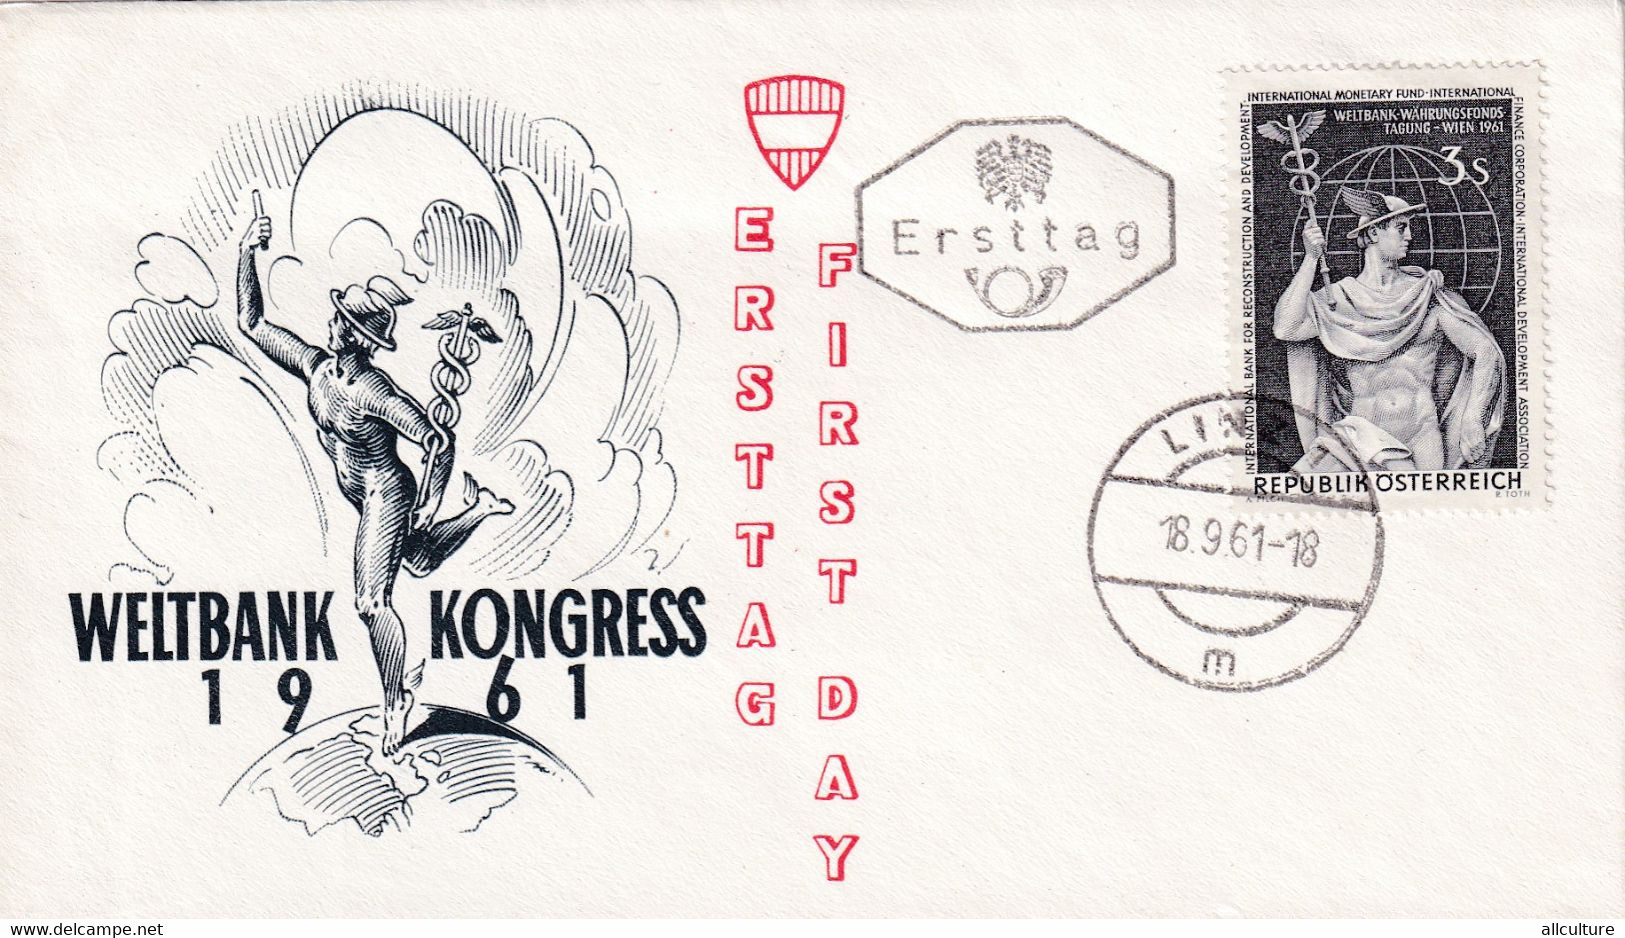 A8383- WELTBANK KONGRESS 1961, ERSTTAG, LINZ 1961 REPUBLIK OESTERREICH AUSTRIA USED STAMP ON COVER - Lettres & Documents